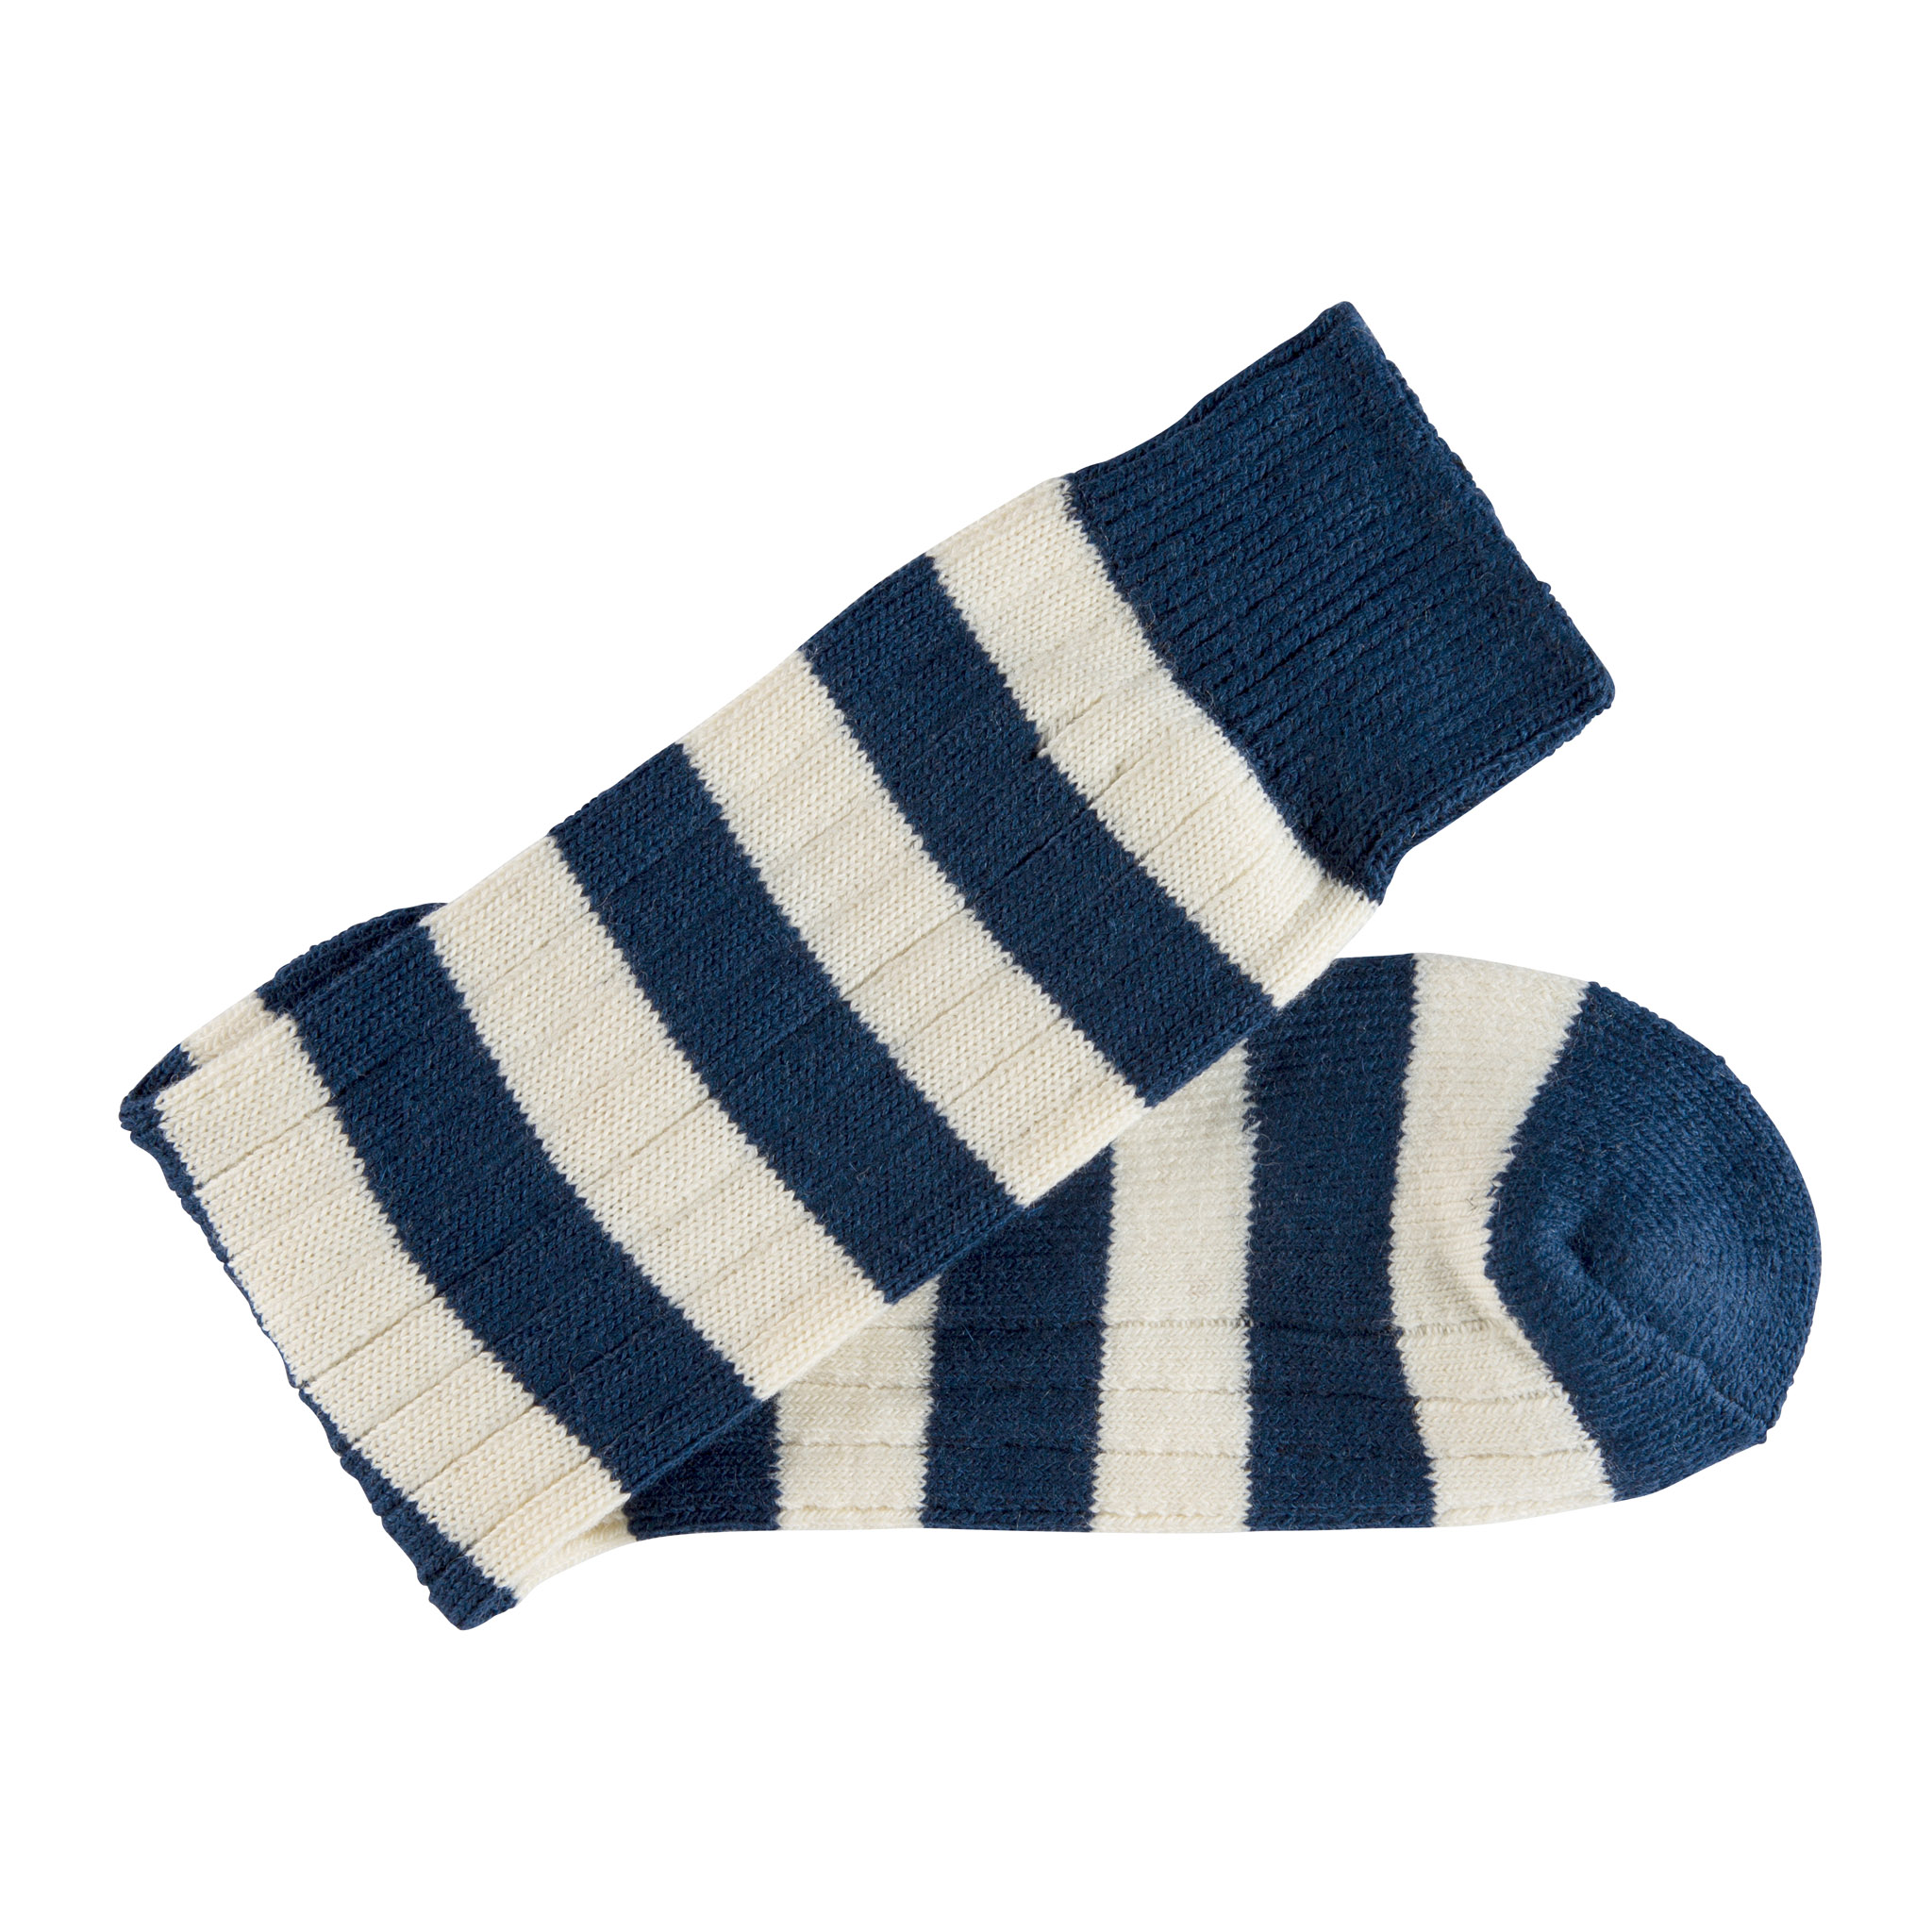 Merino Wool blue and white stripe sock - folded